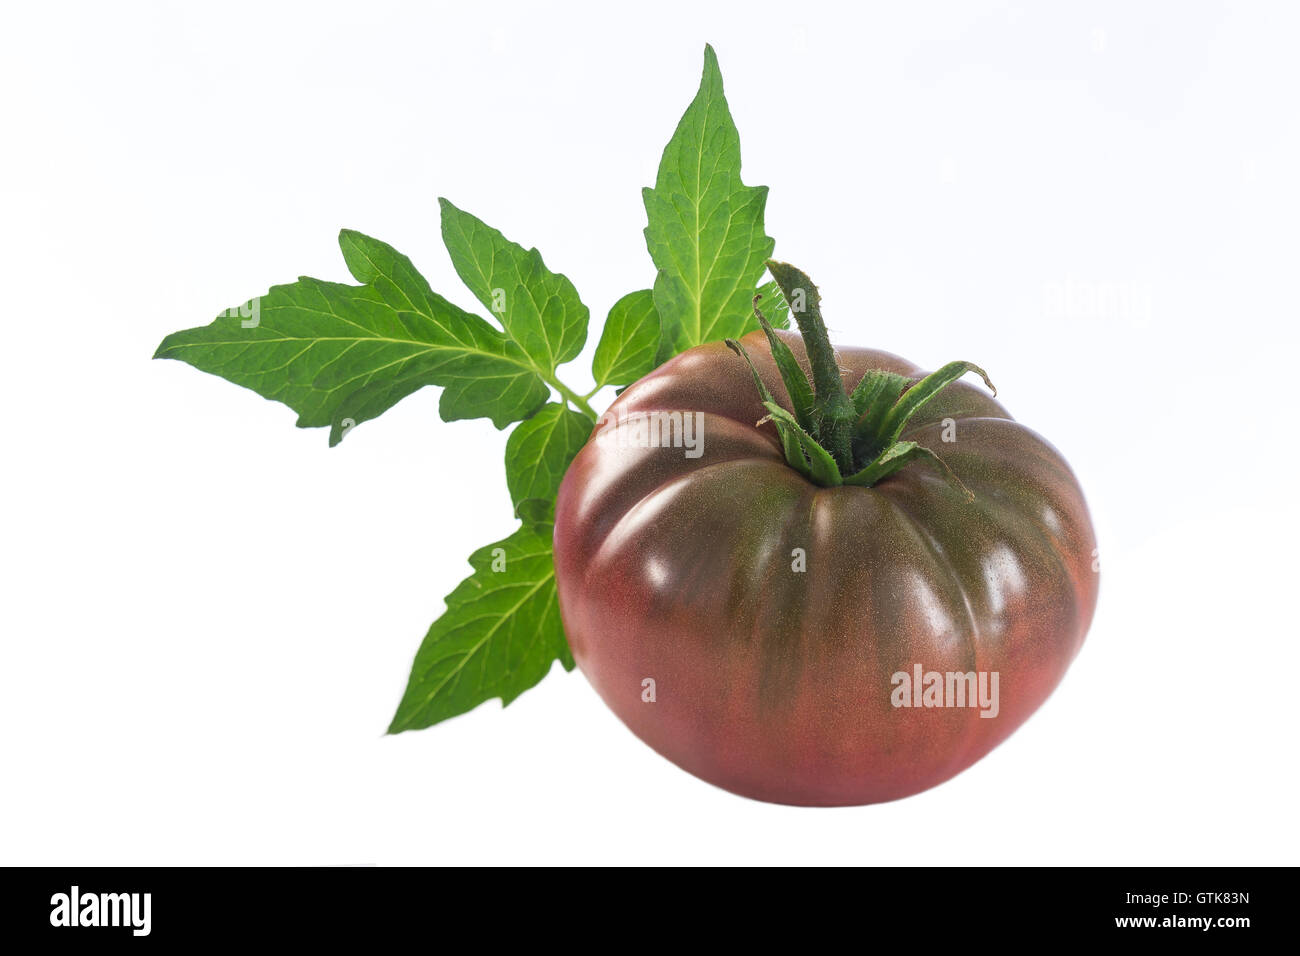 158 Black Brandywine Tomato Royalty-Free Images, Stock Photos